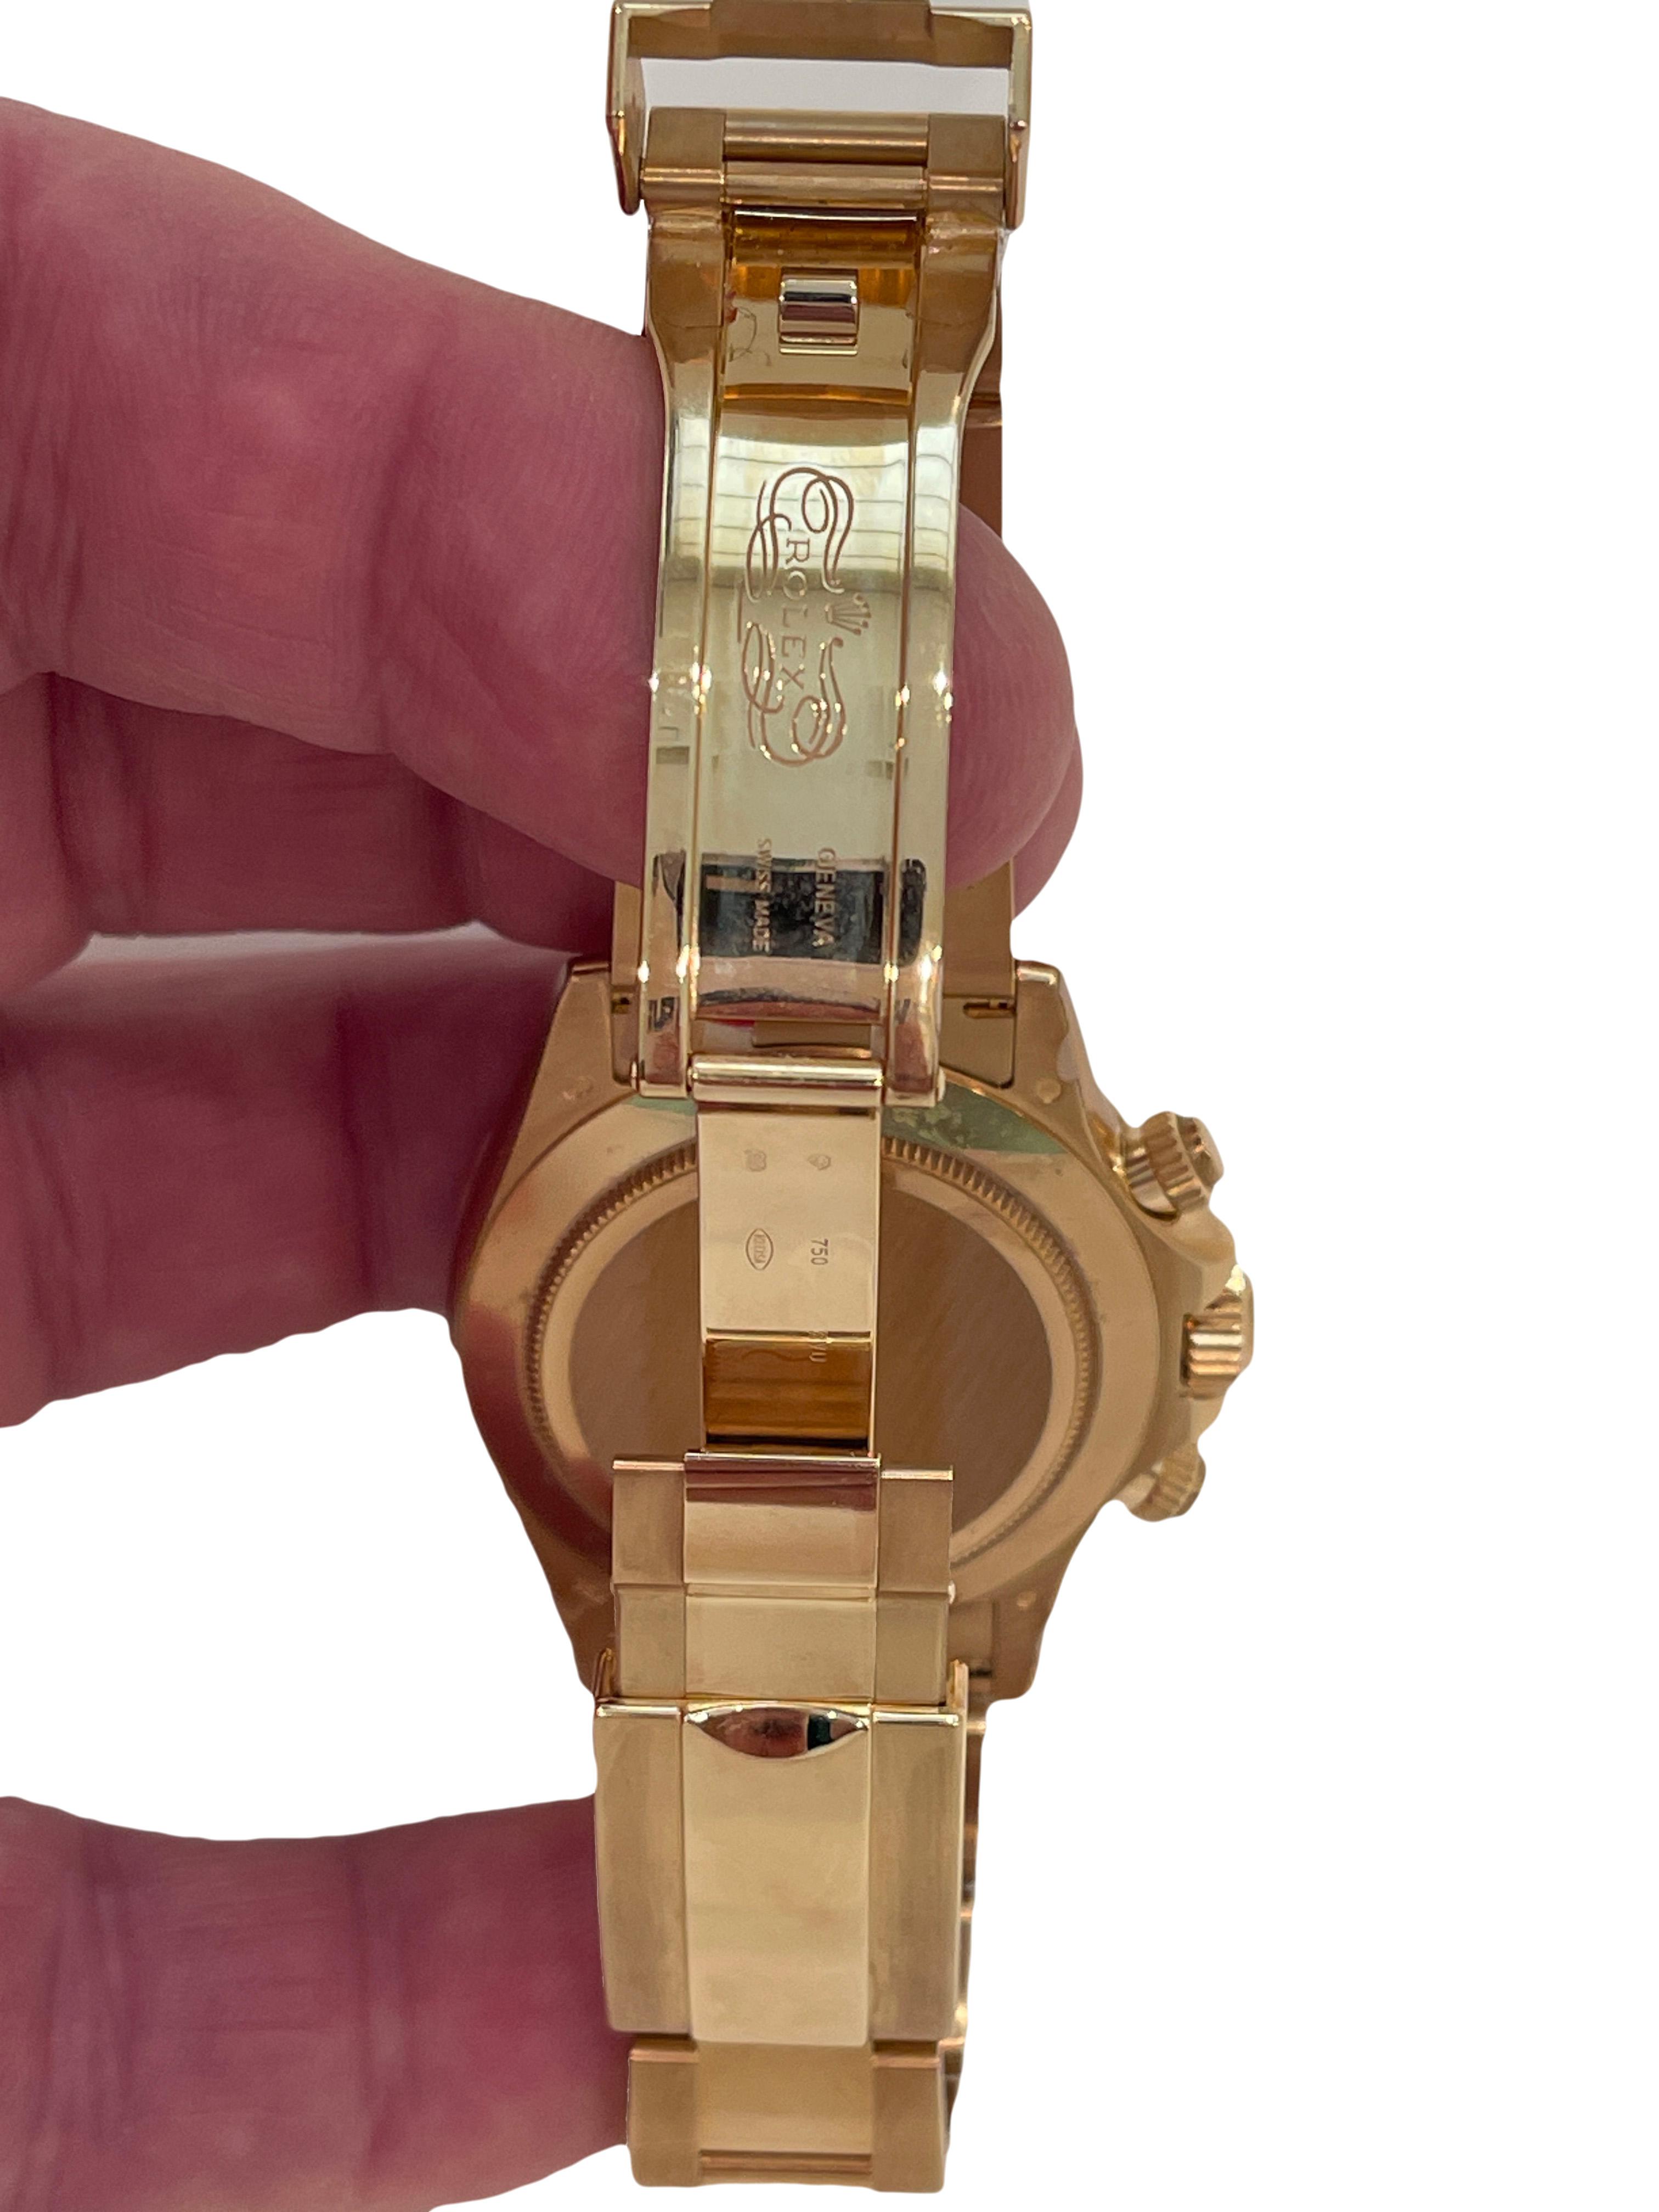 Rolex, Year 2013, #116528, Movement AUTOMATIC Chronograph. Model: Daytona Yellow Gold, White Dial. - Image 3 of 4